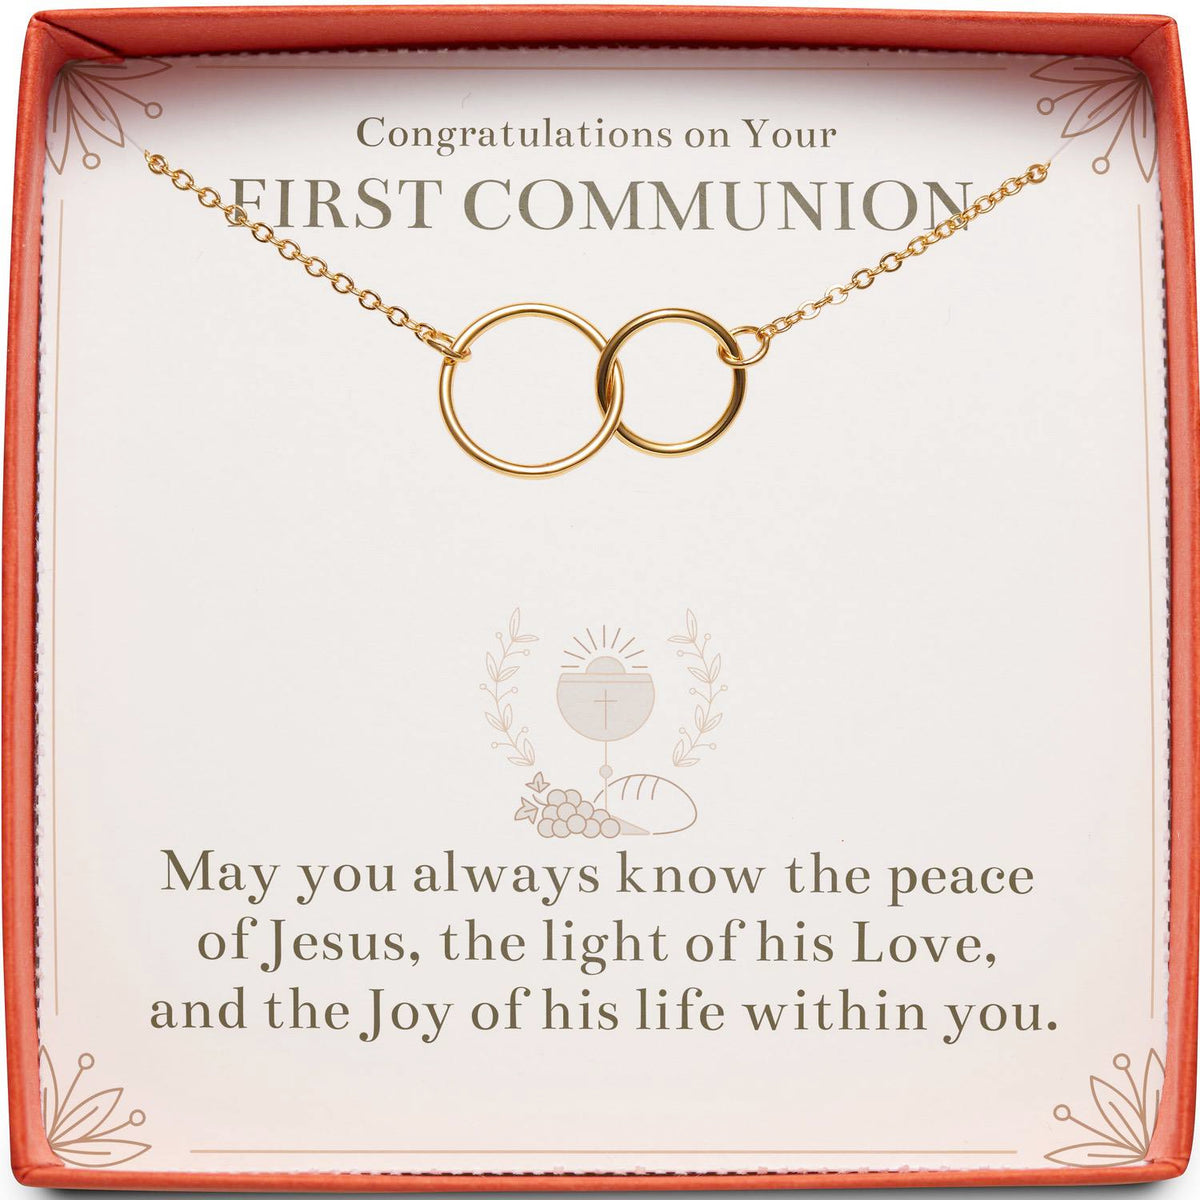 Congratulations on Your First Communion | Peace of Jesus | Interlocking Circles